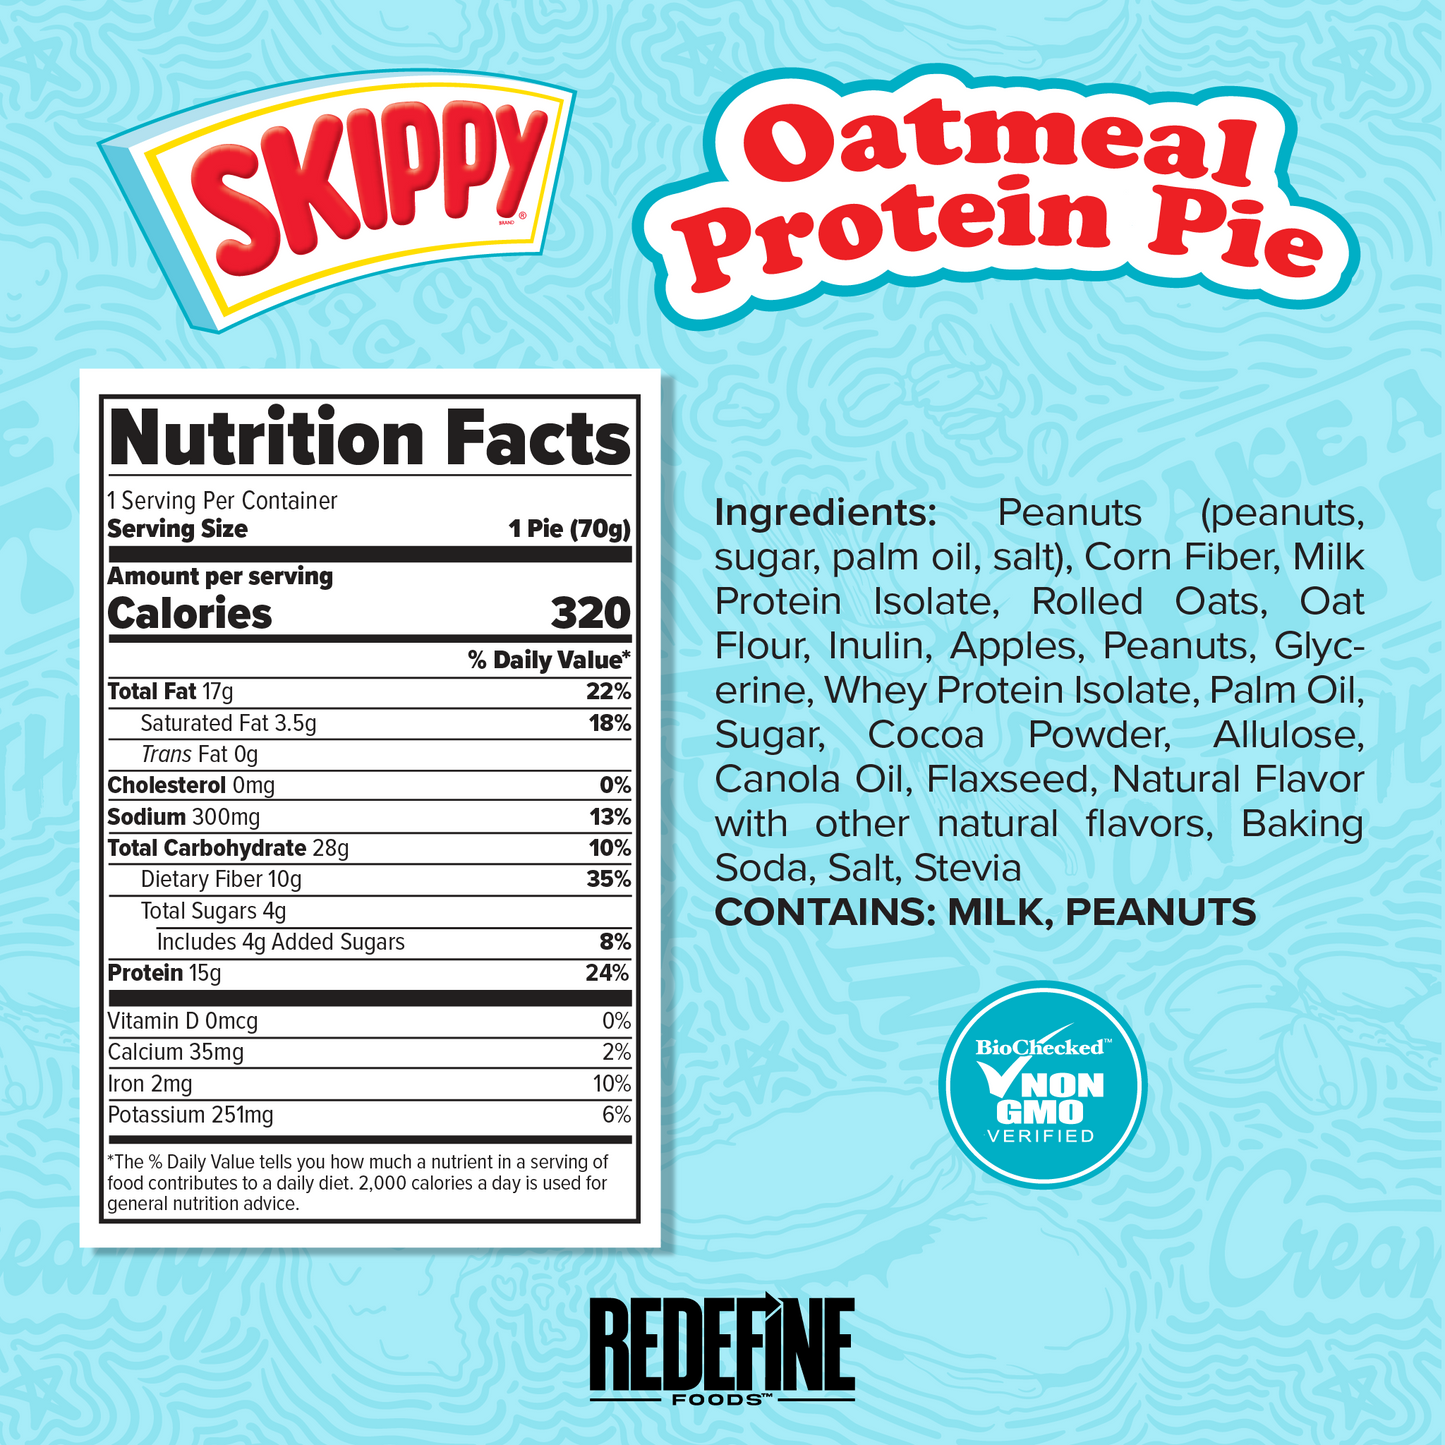 Oatmeal Protein Pie, Skippy Chocolate